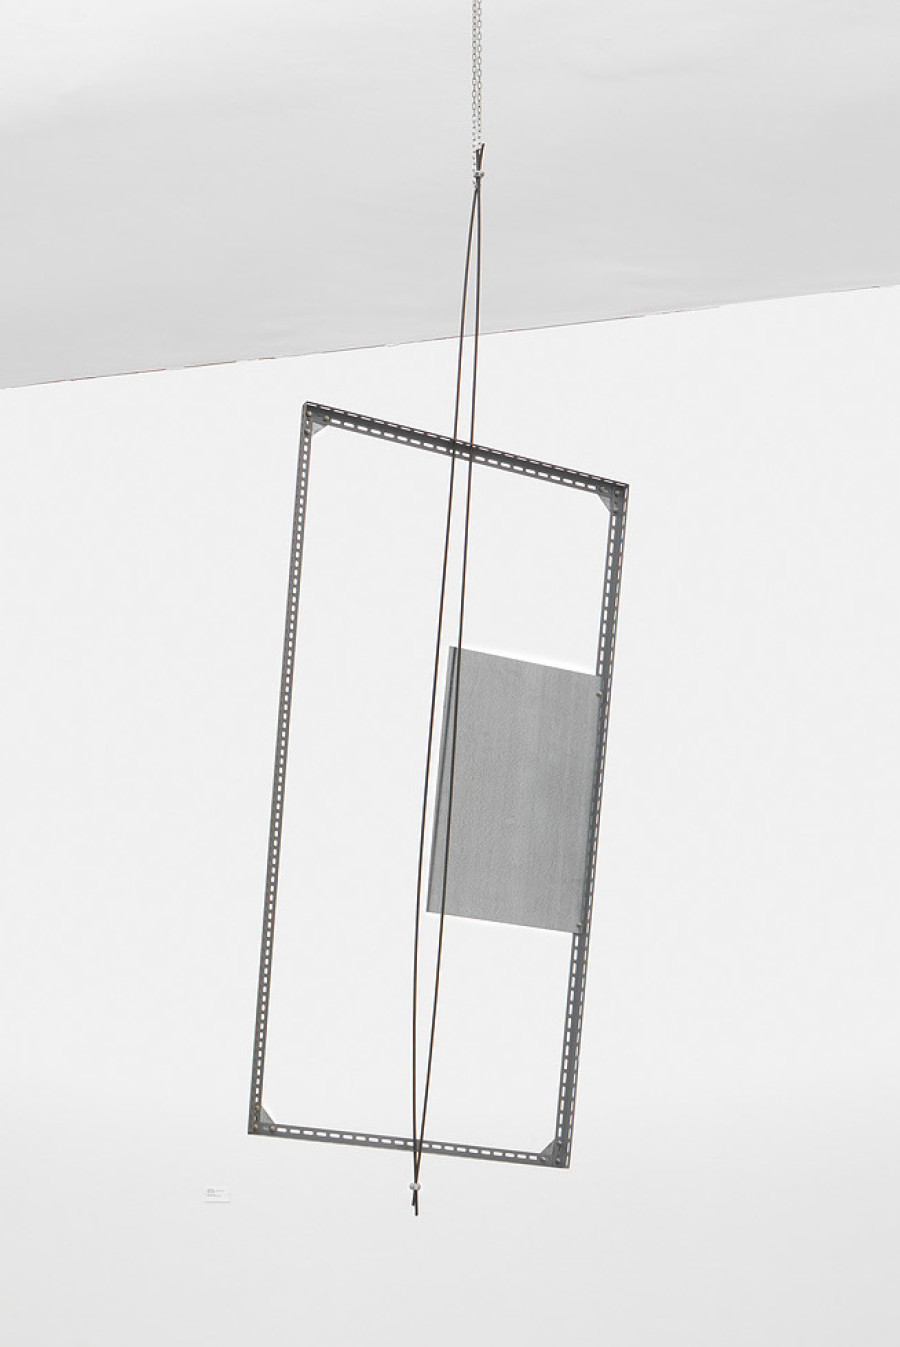 Luciano Fabro (1936–2007), Computer, 1988, Stahl und Aluminium, 305 x 102 x 5.5 cm, Kunst Museum Winterthur, Legat Johannes Gachnang, 2006. Foto: SIK-ISEA, Zürich, Philipp Hitz